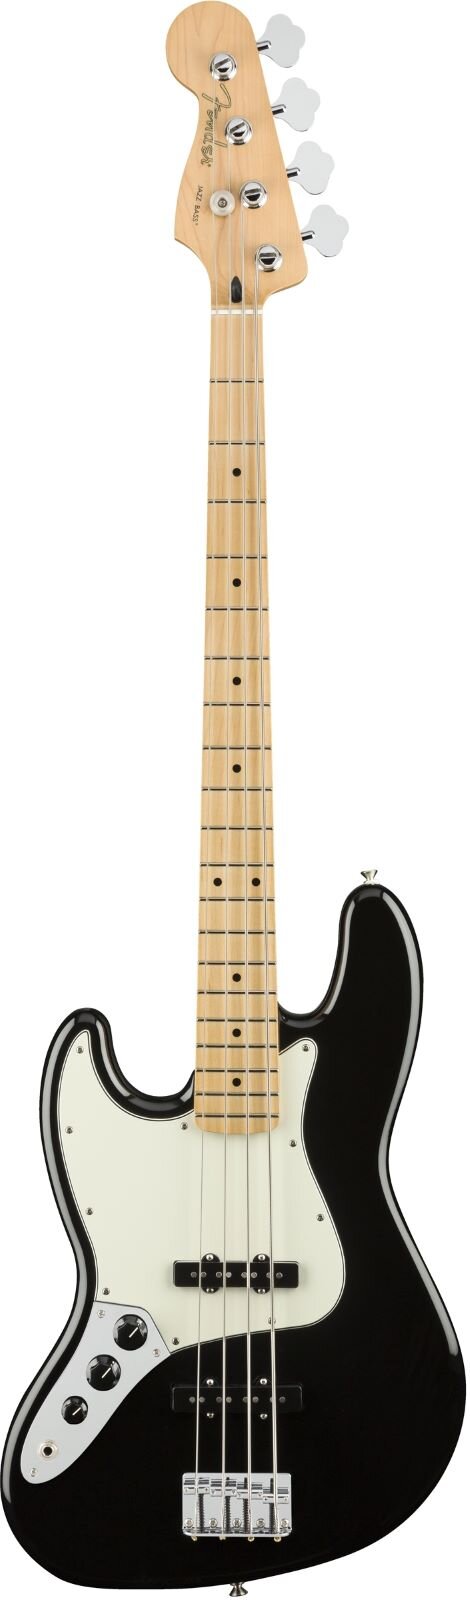 Fender Player Jazz Bass Left-Handed Maple Fingerboard Black : photo 1